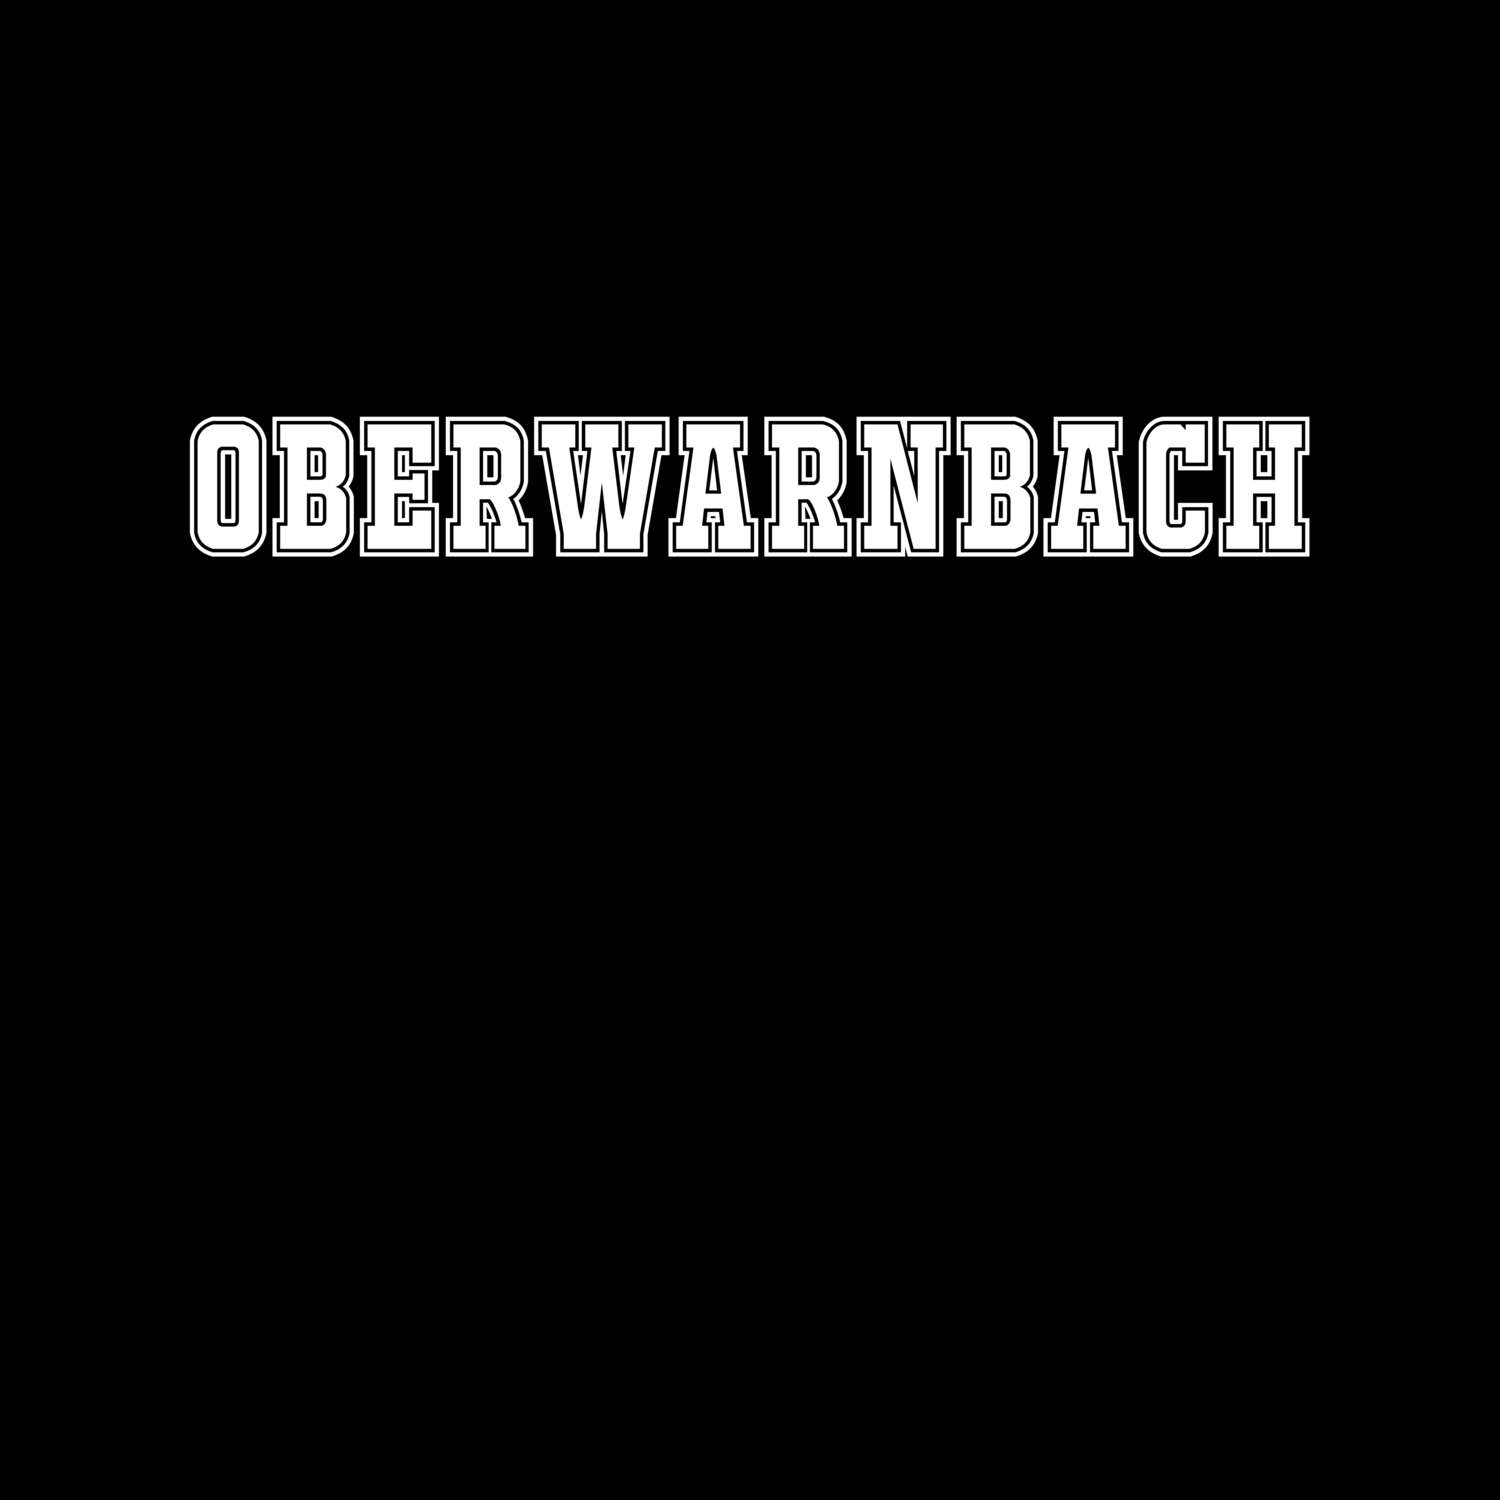 Oberwarnbach T-Shirt »Classic«